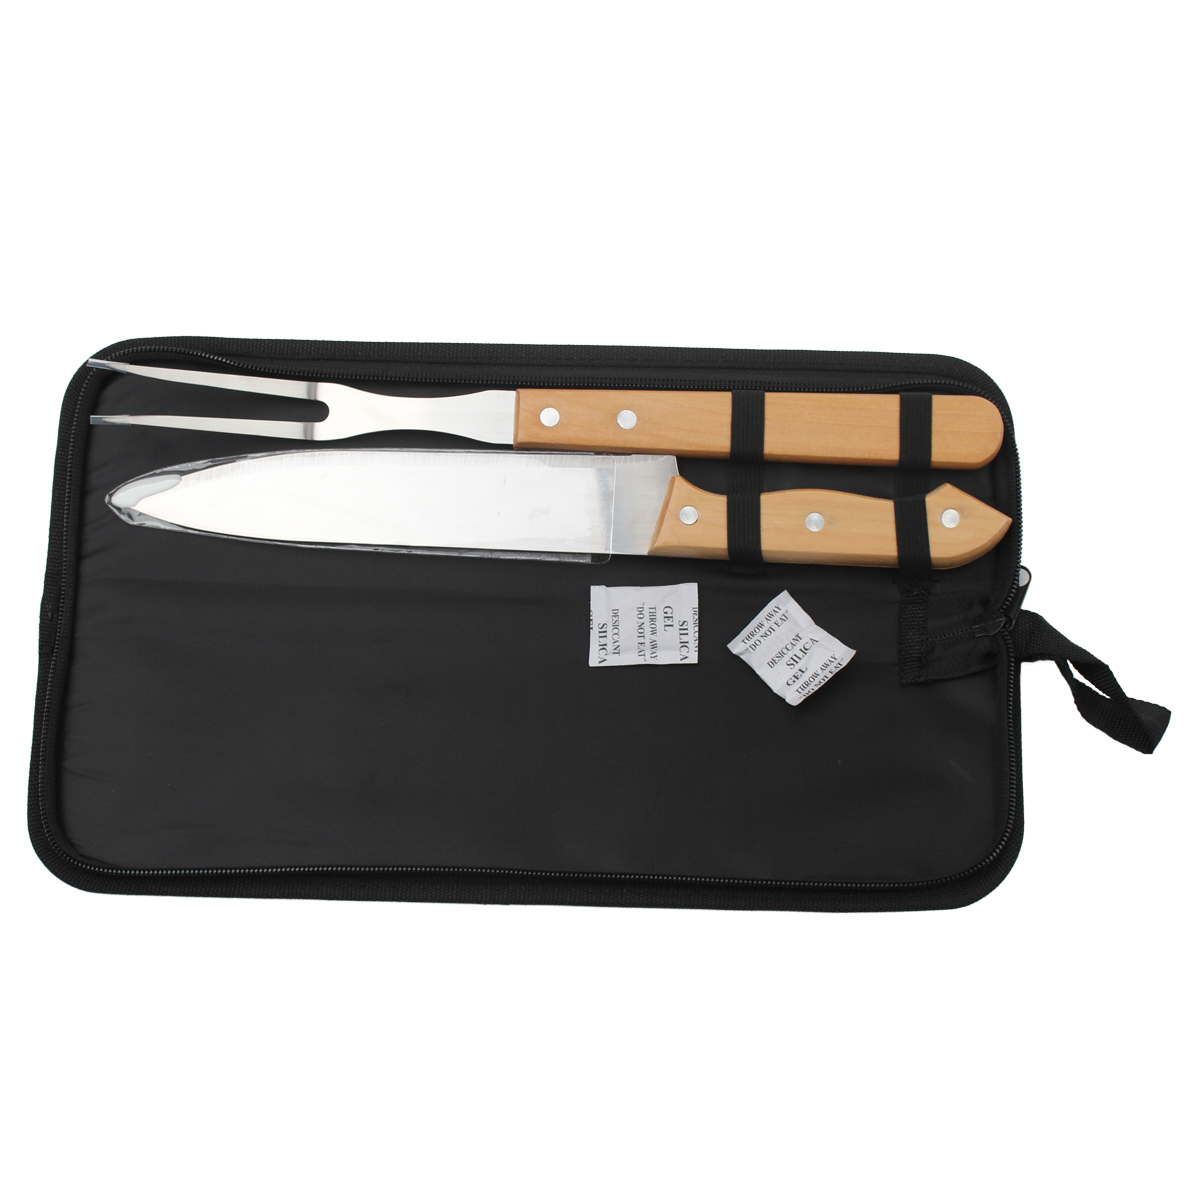 Wooden-handle Cutlery Set w/black bag